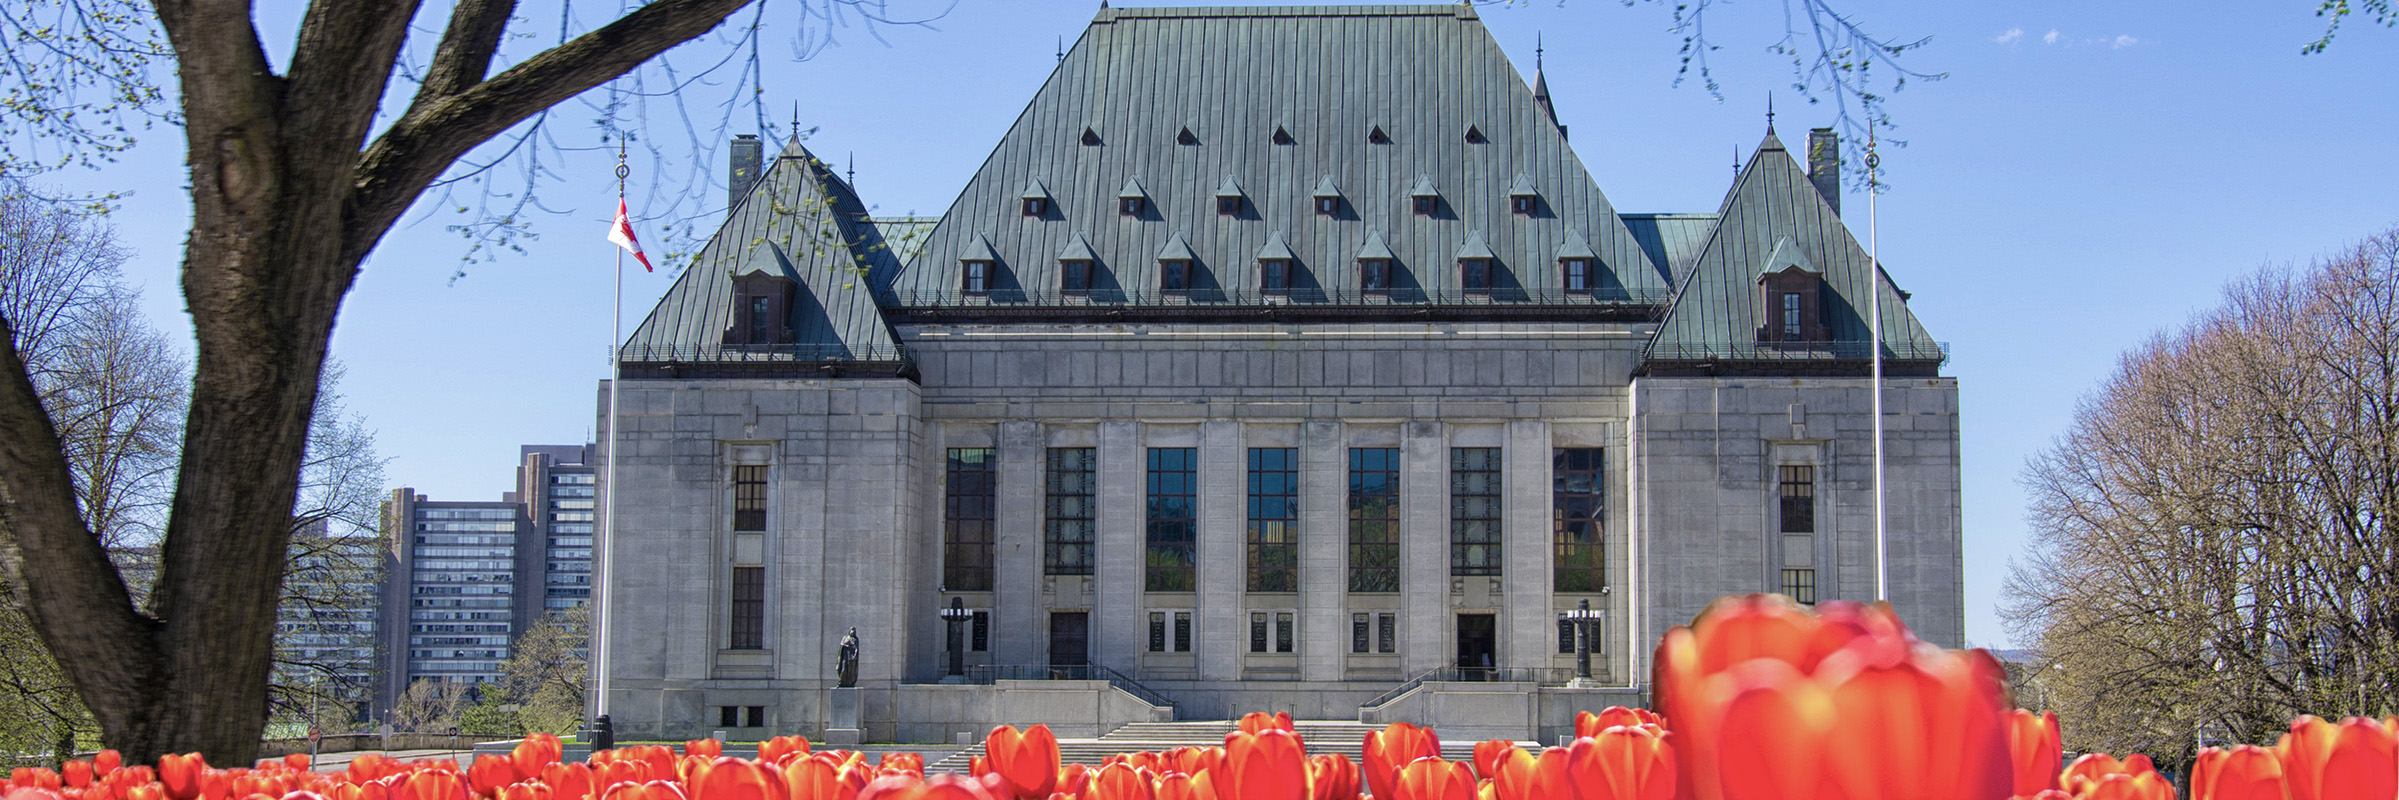 Supreme Court of Canada tulips